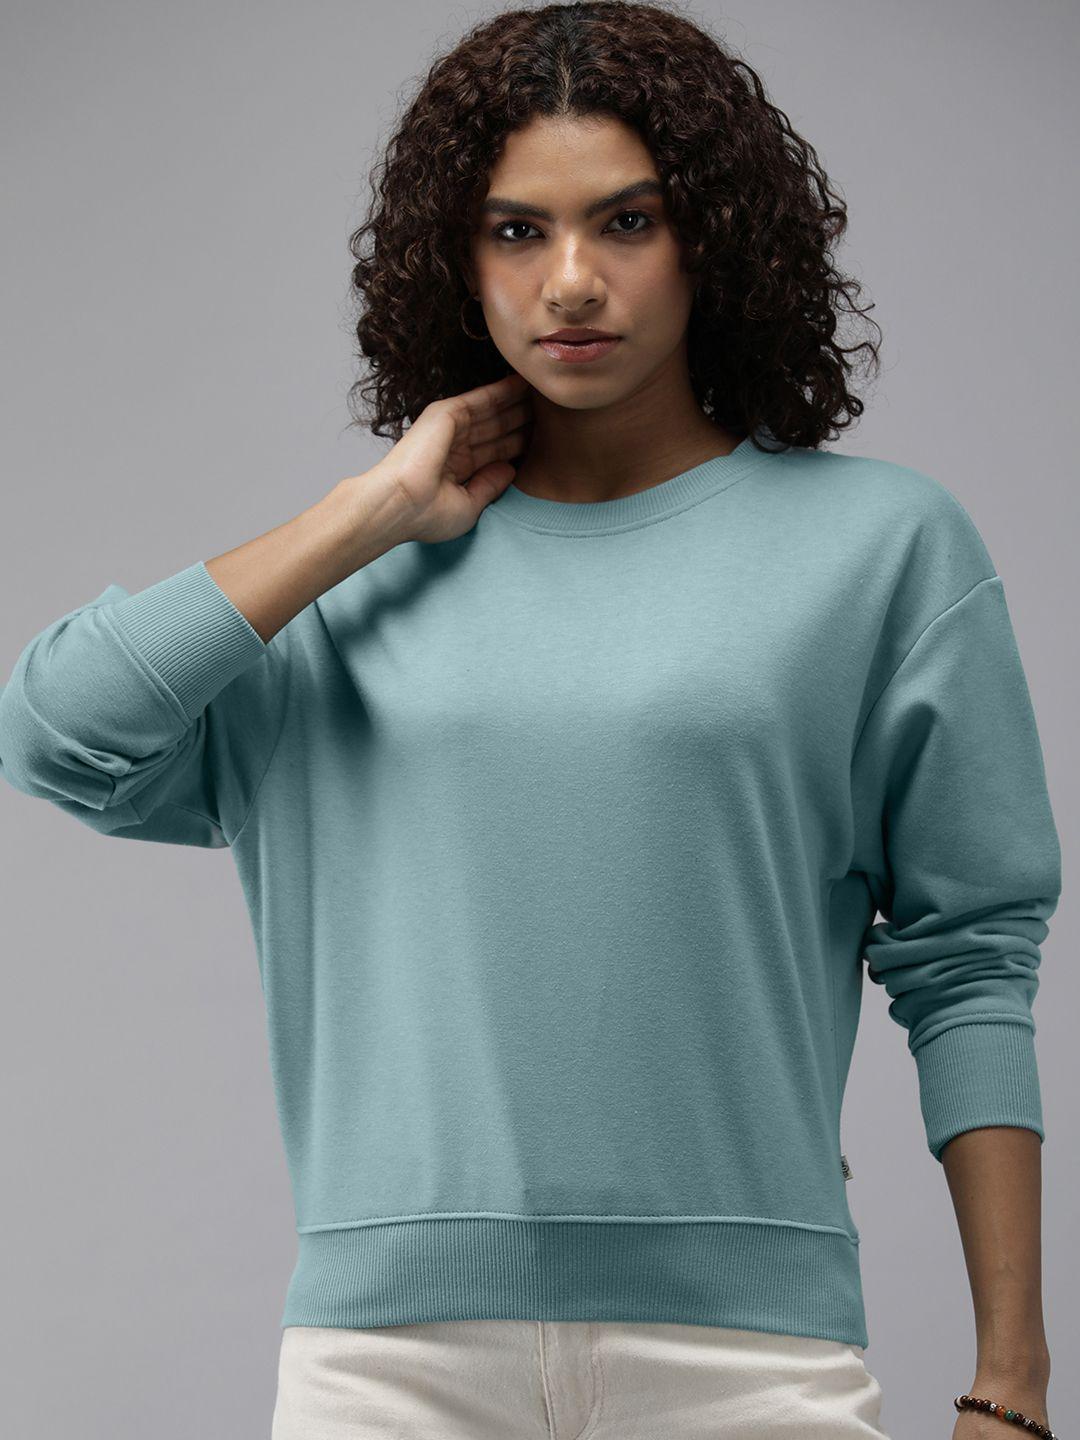 the roadster lifestyle co. women solid sweatshirt